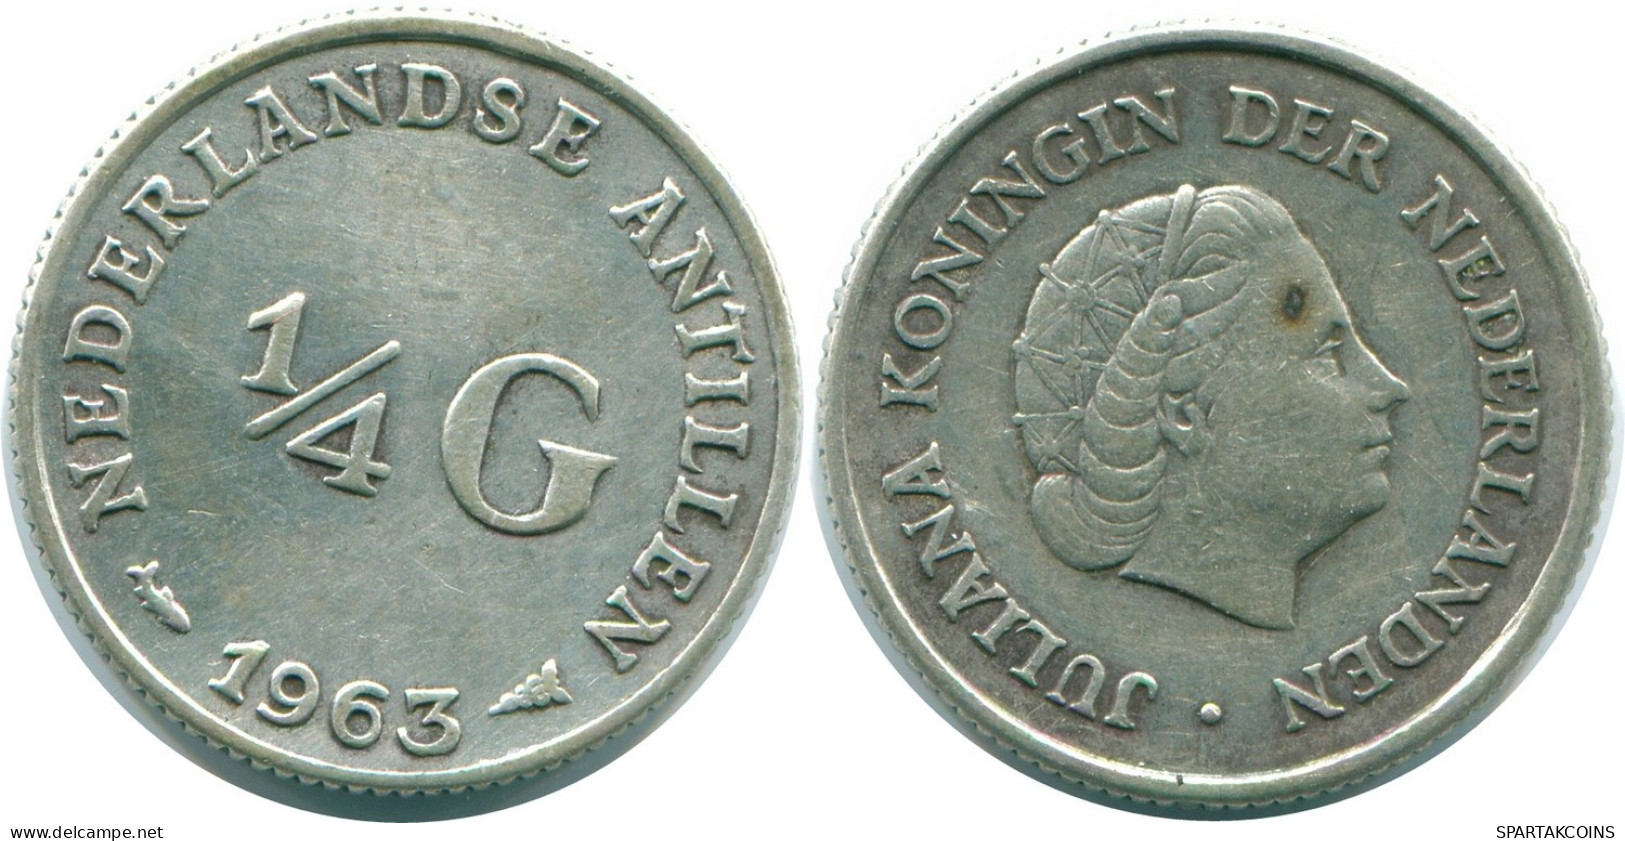 1/4 GULDEN 1963 NETHERLANDS ANTILLES SILVER Colonial Coin #NL11260.4.U.A - Antilles Néerlandaises